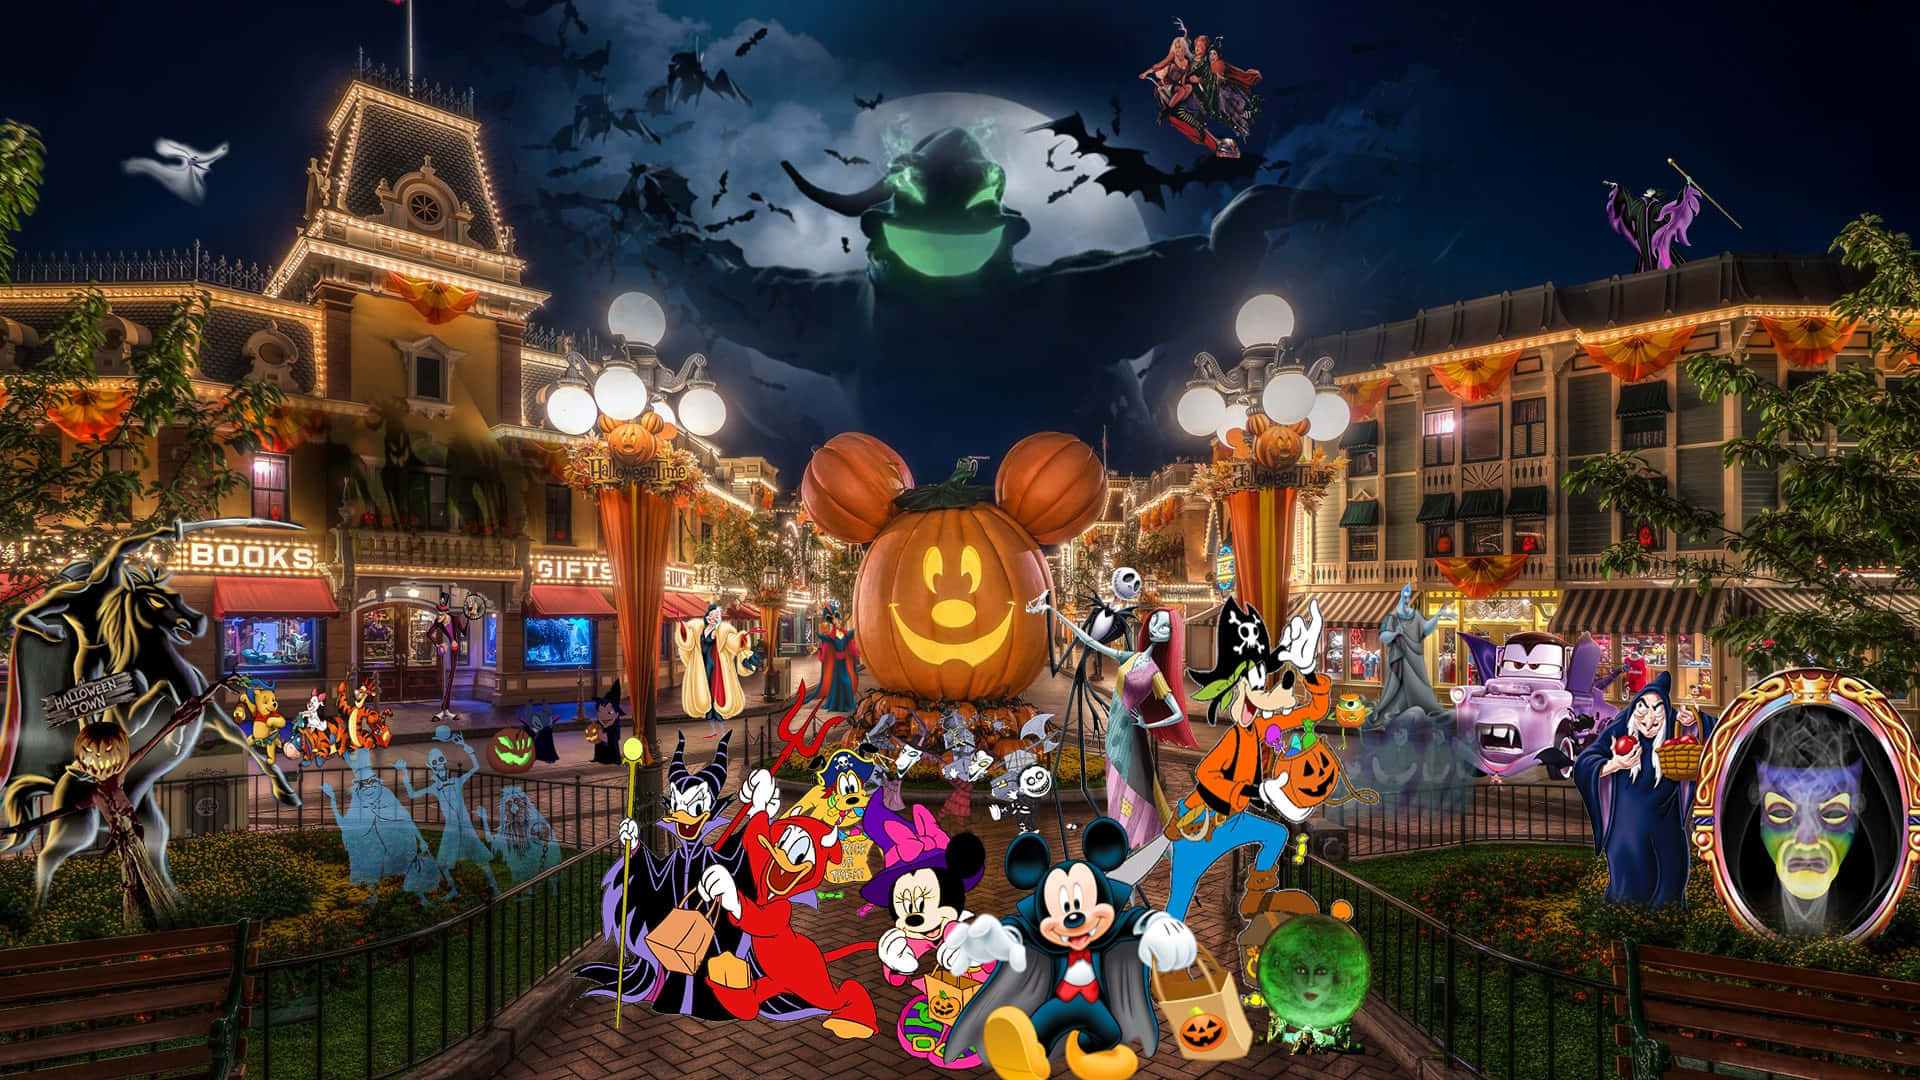 Magicanotte Di Halloween Disney